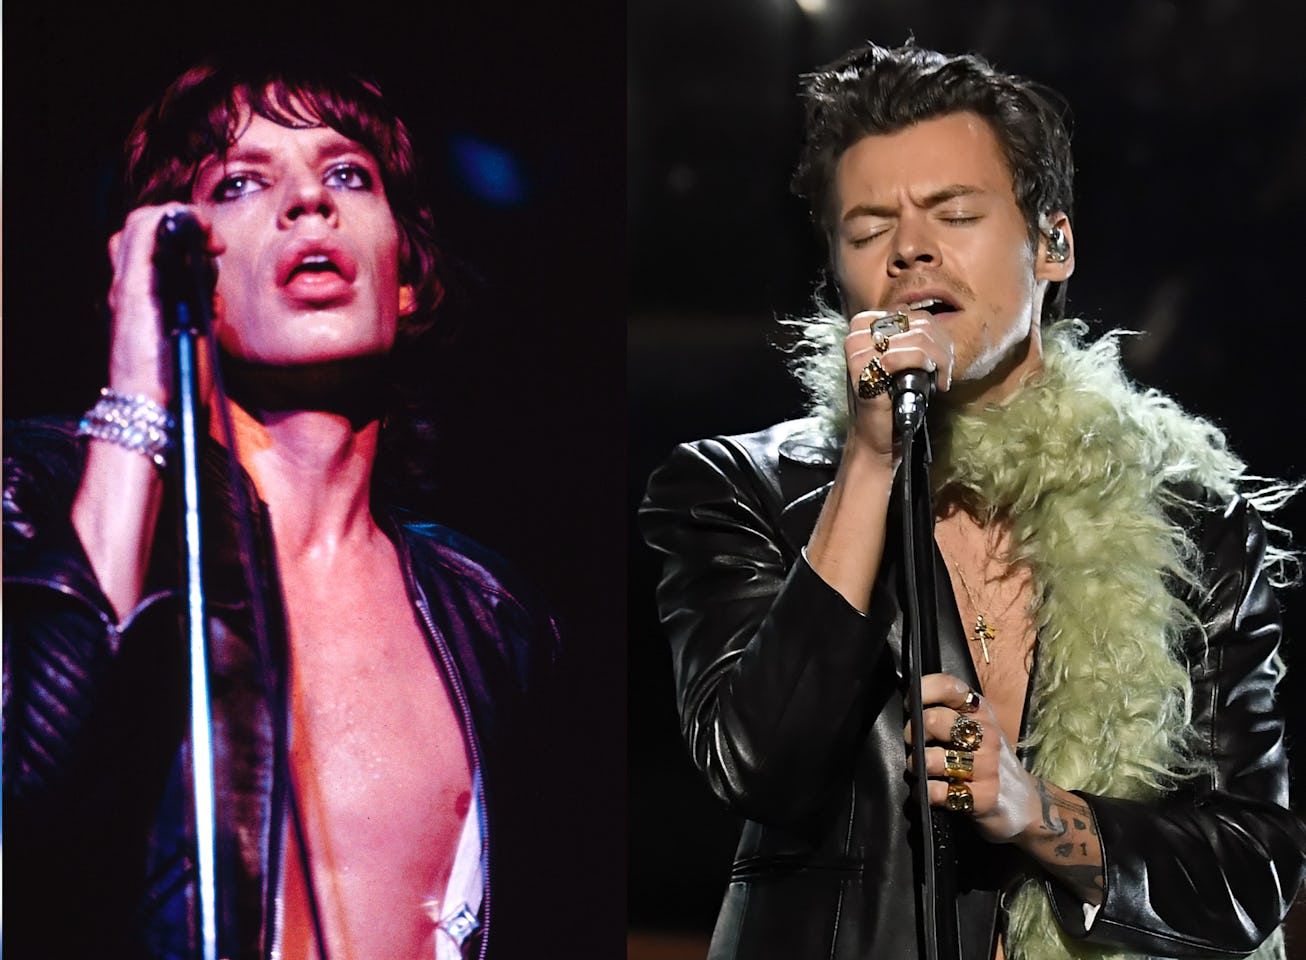 Mick Jagger shut down Harry Styles comparisons